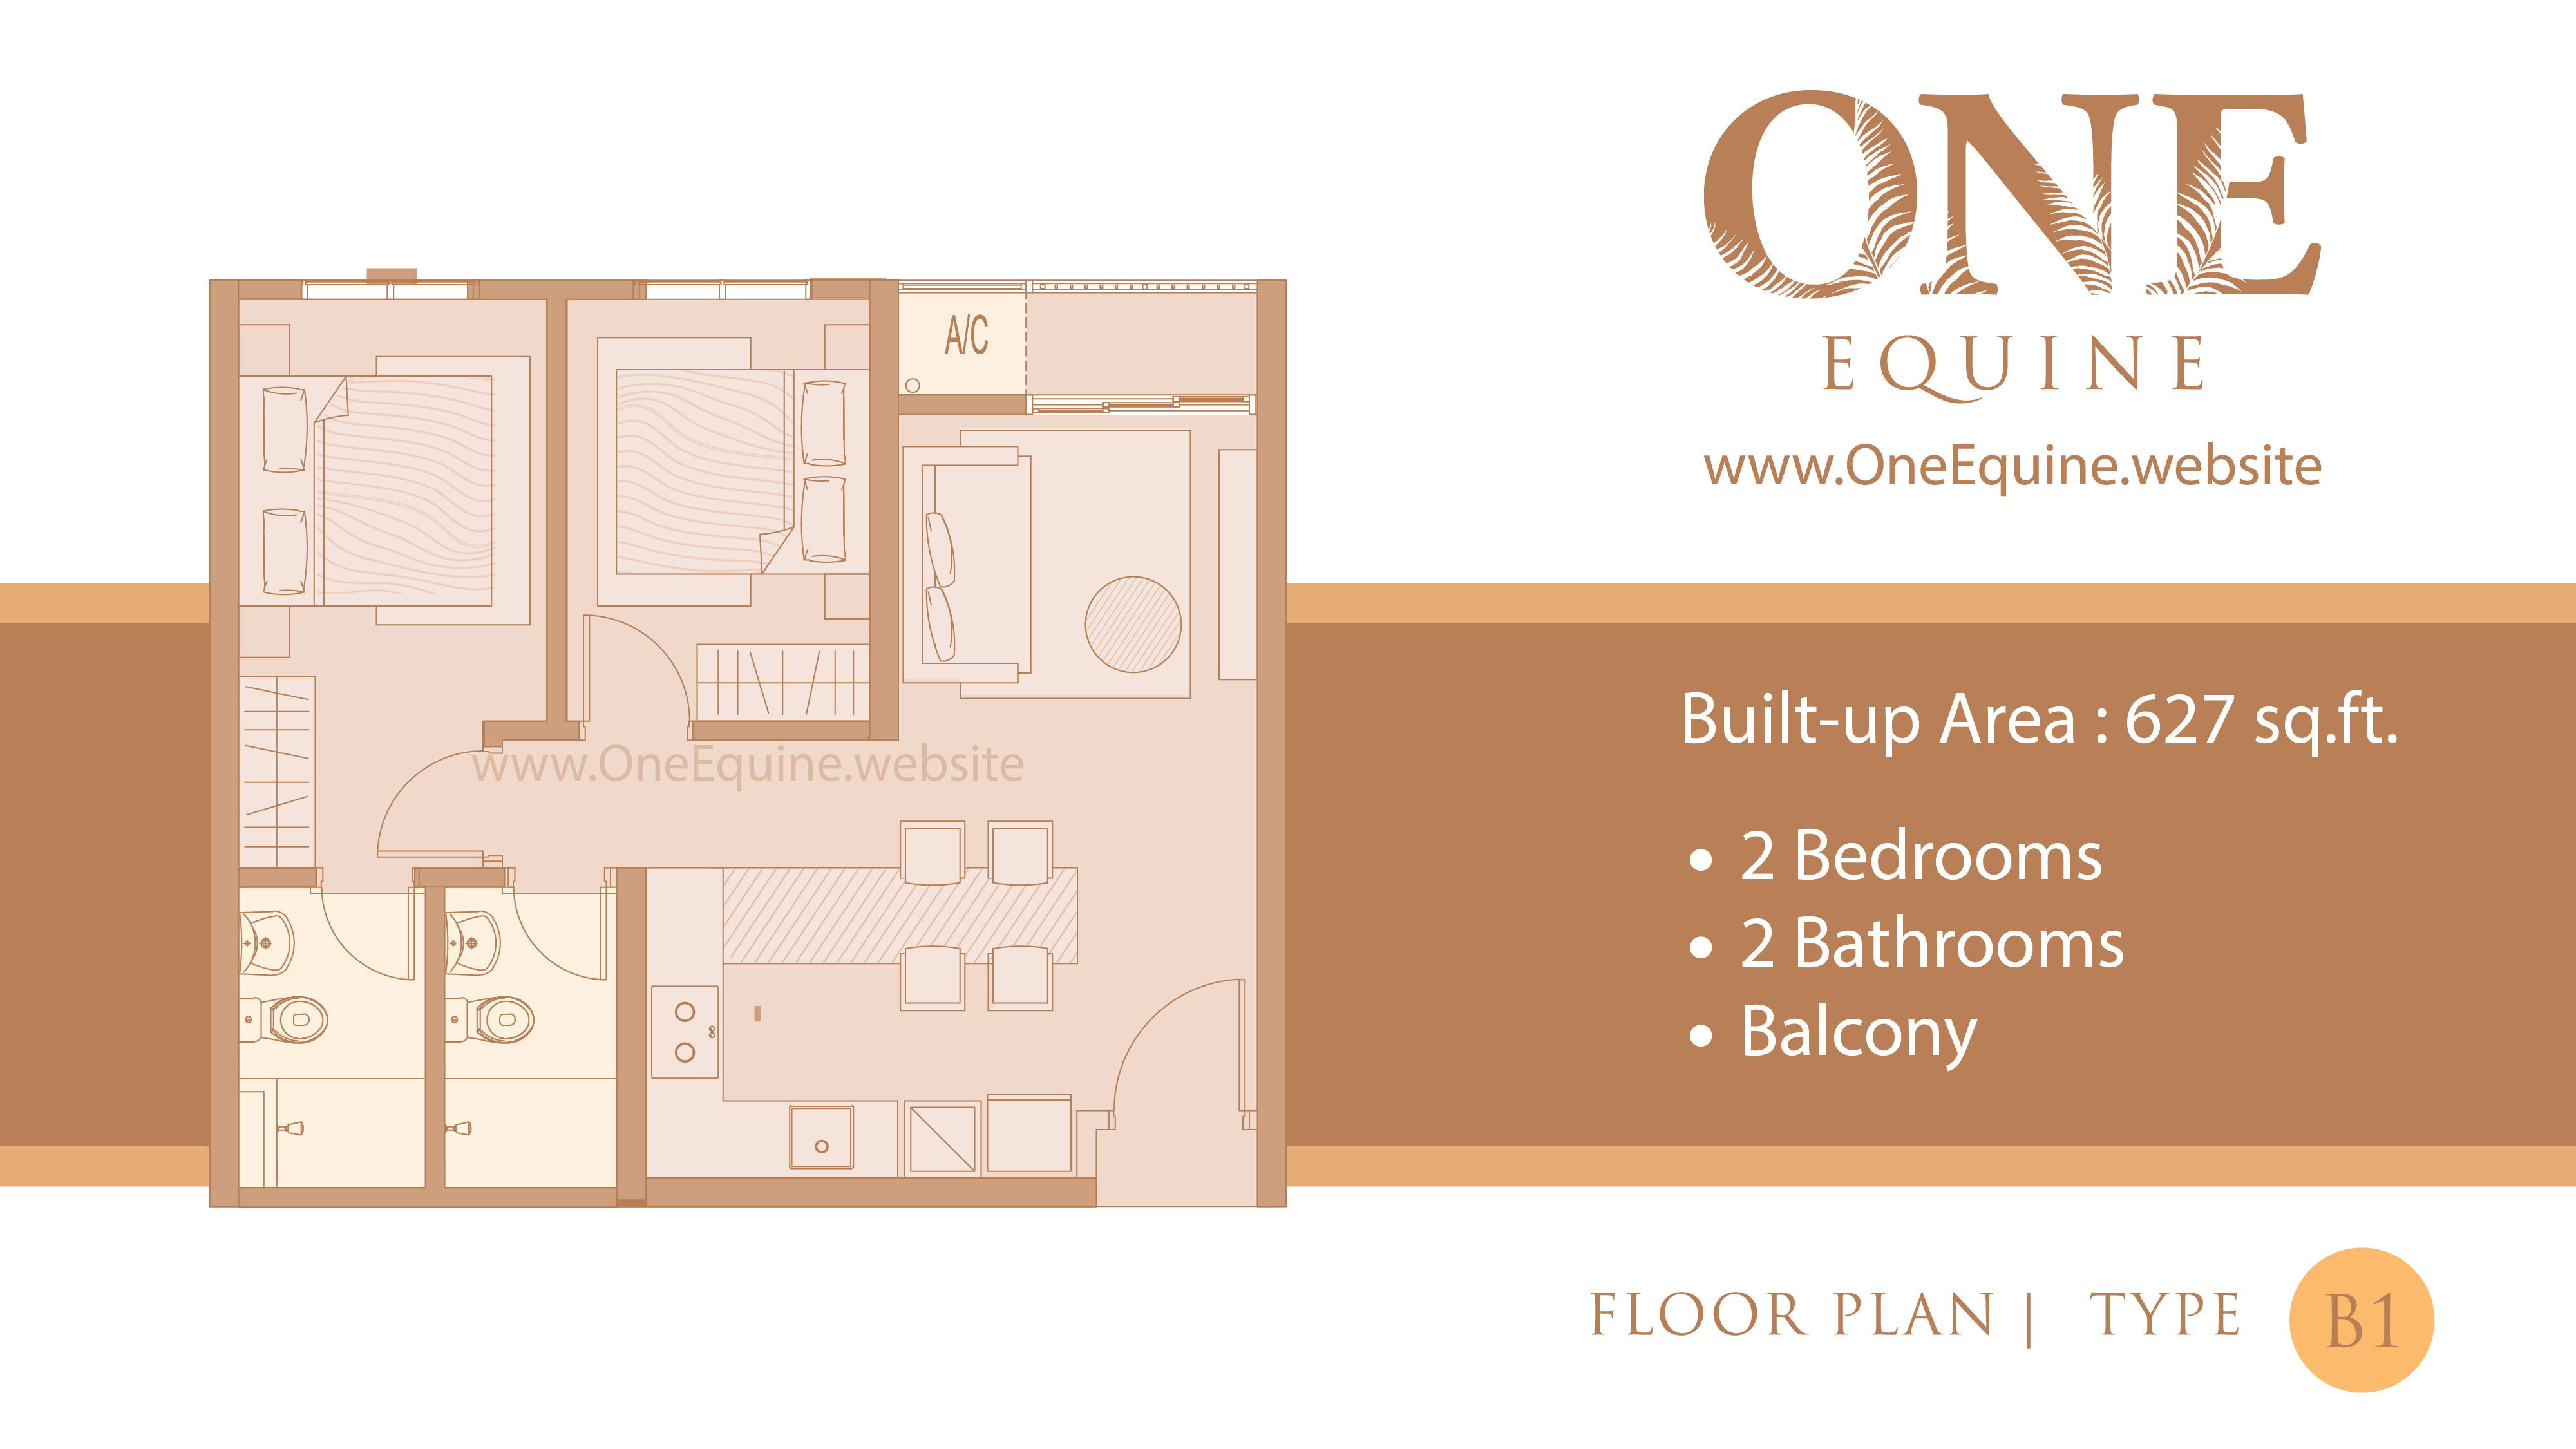 One Equine Park Seri Kembangan - Serviced Apartment 2 Bedrooms 2 Bathrooms Balcony - Floor Plan Type B1 - 627 sqft